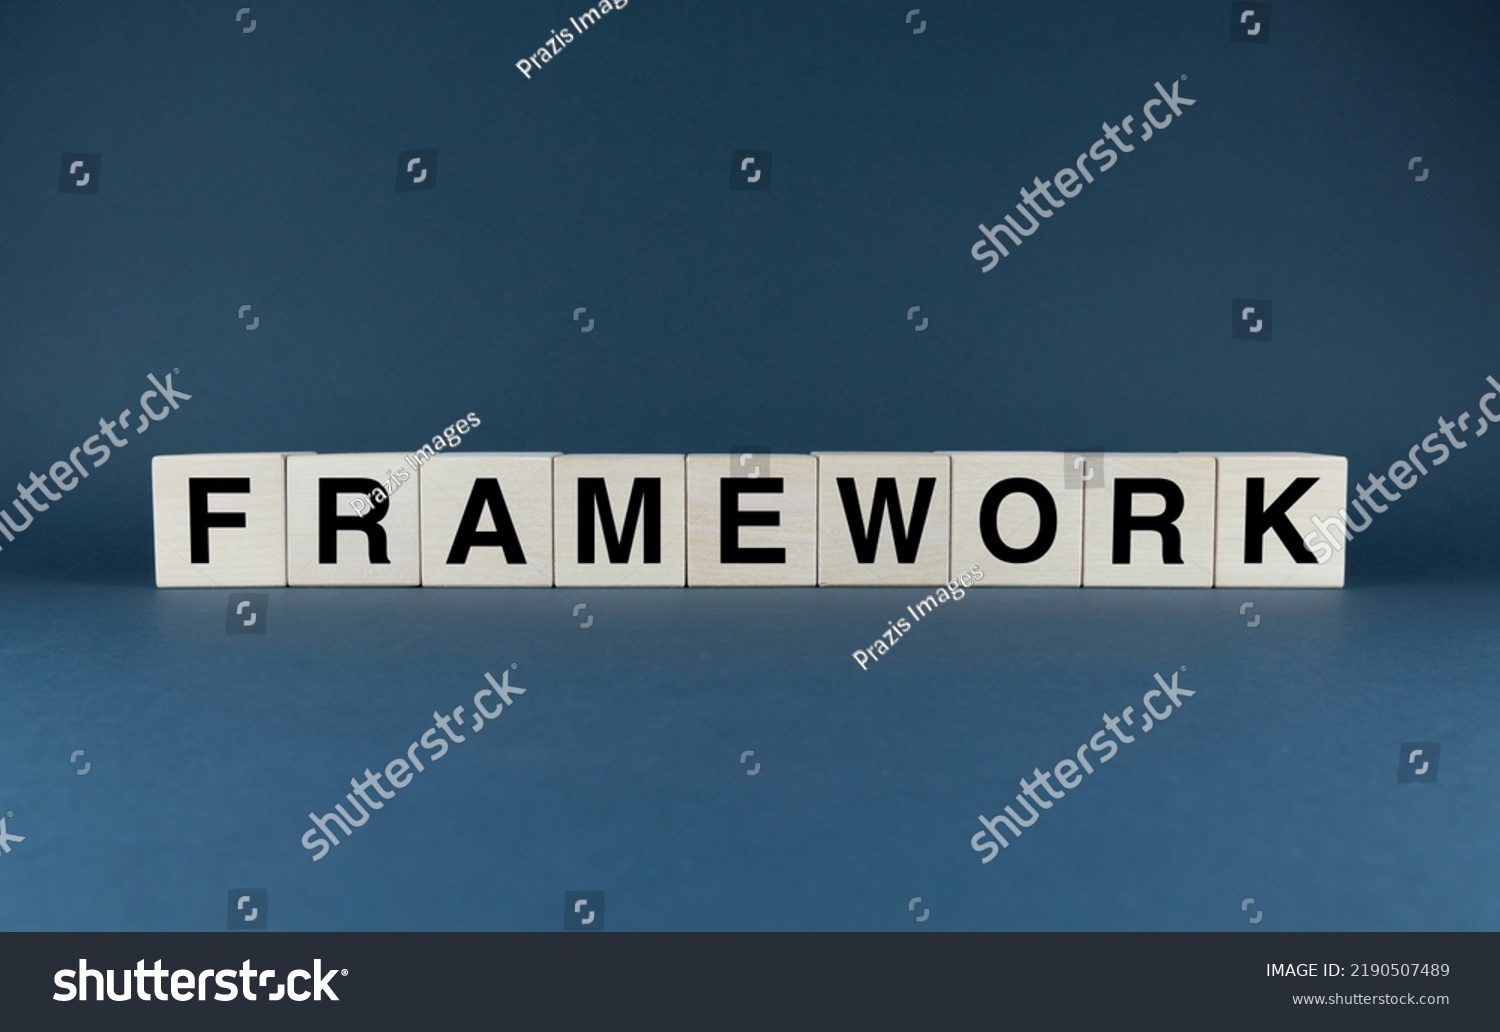 Framework. Cubes form the word Framework. Concept of technology framework and business #2190507489